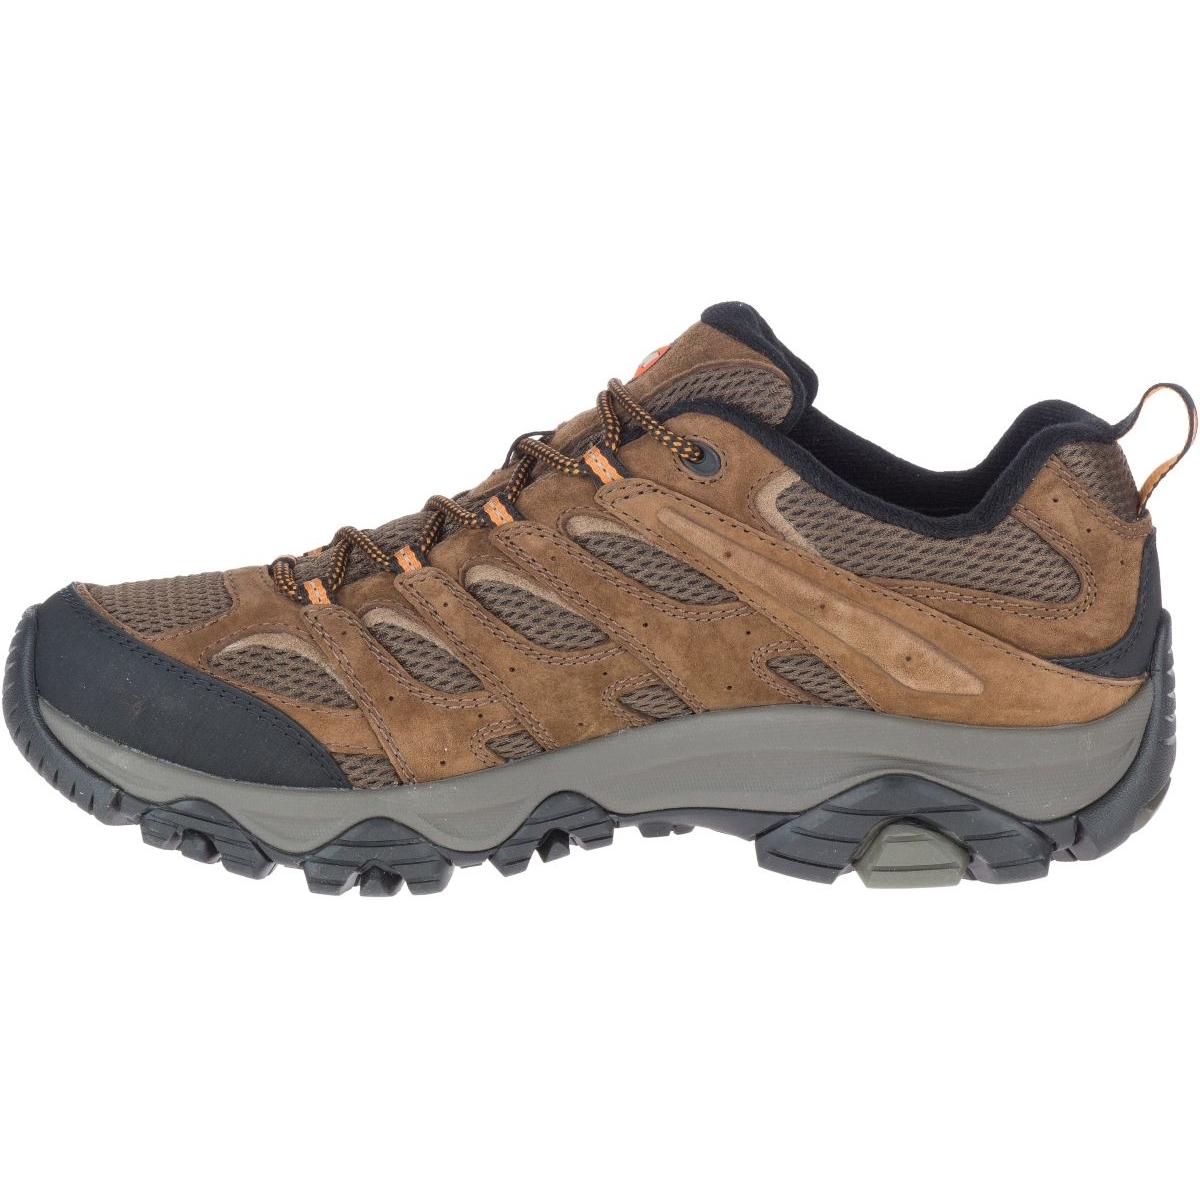 Merrell Men's Moab 3 GORE-TEX Hiking Shoe Earth - J036257 EARTH - Brown, 9.5